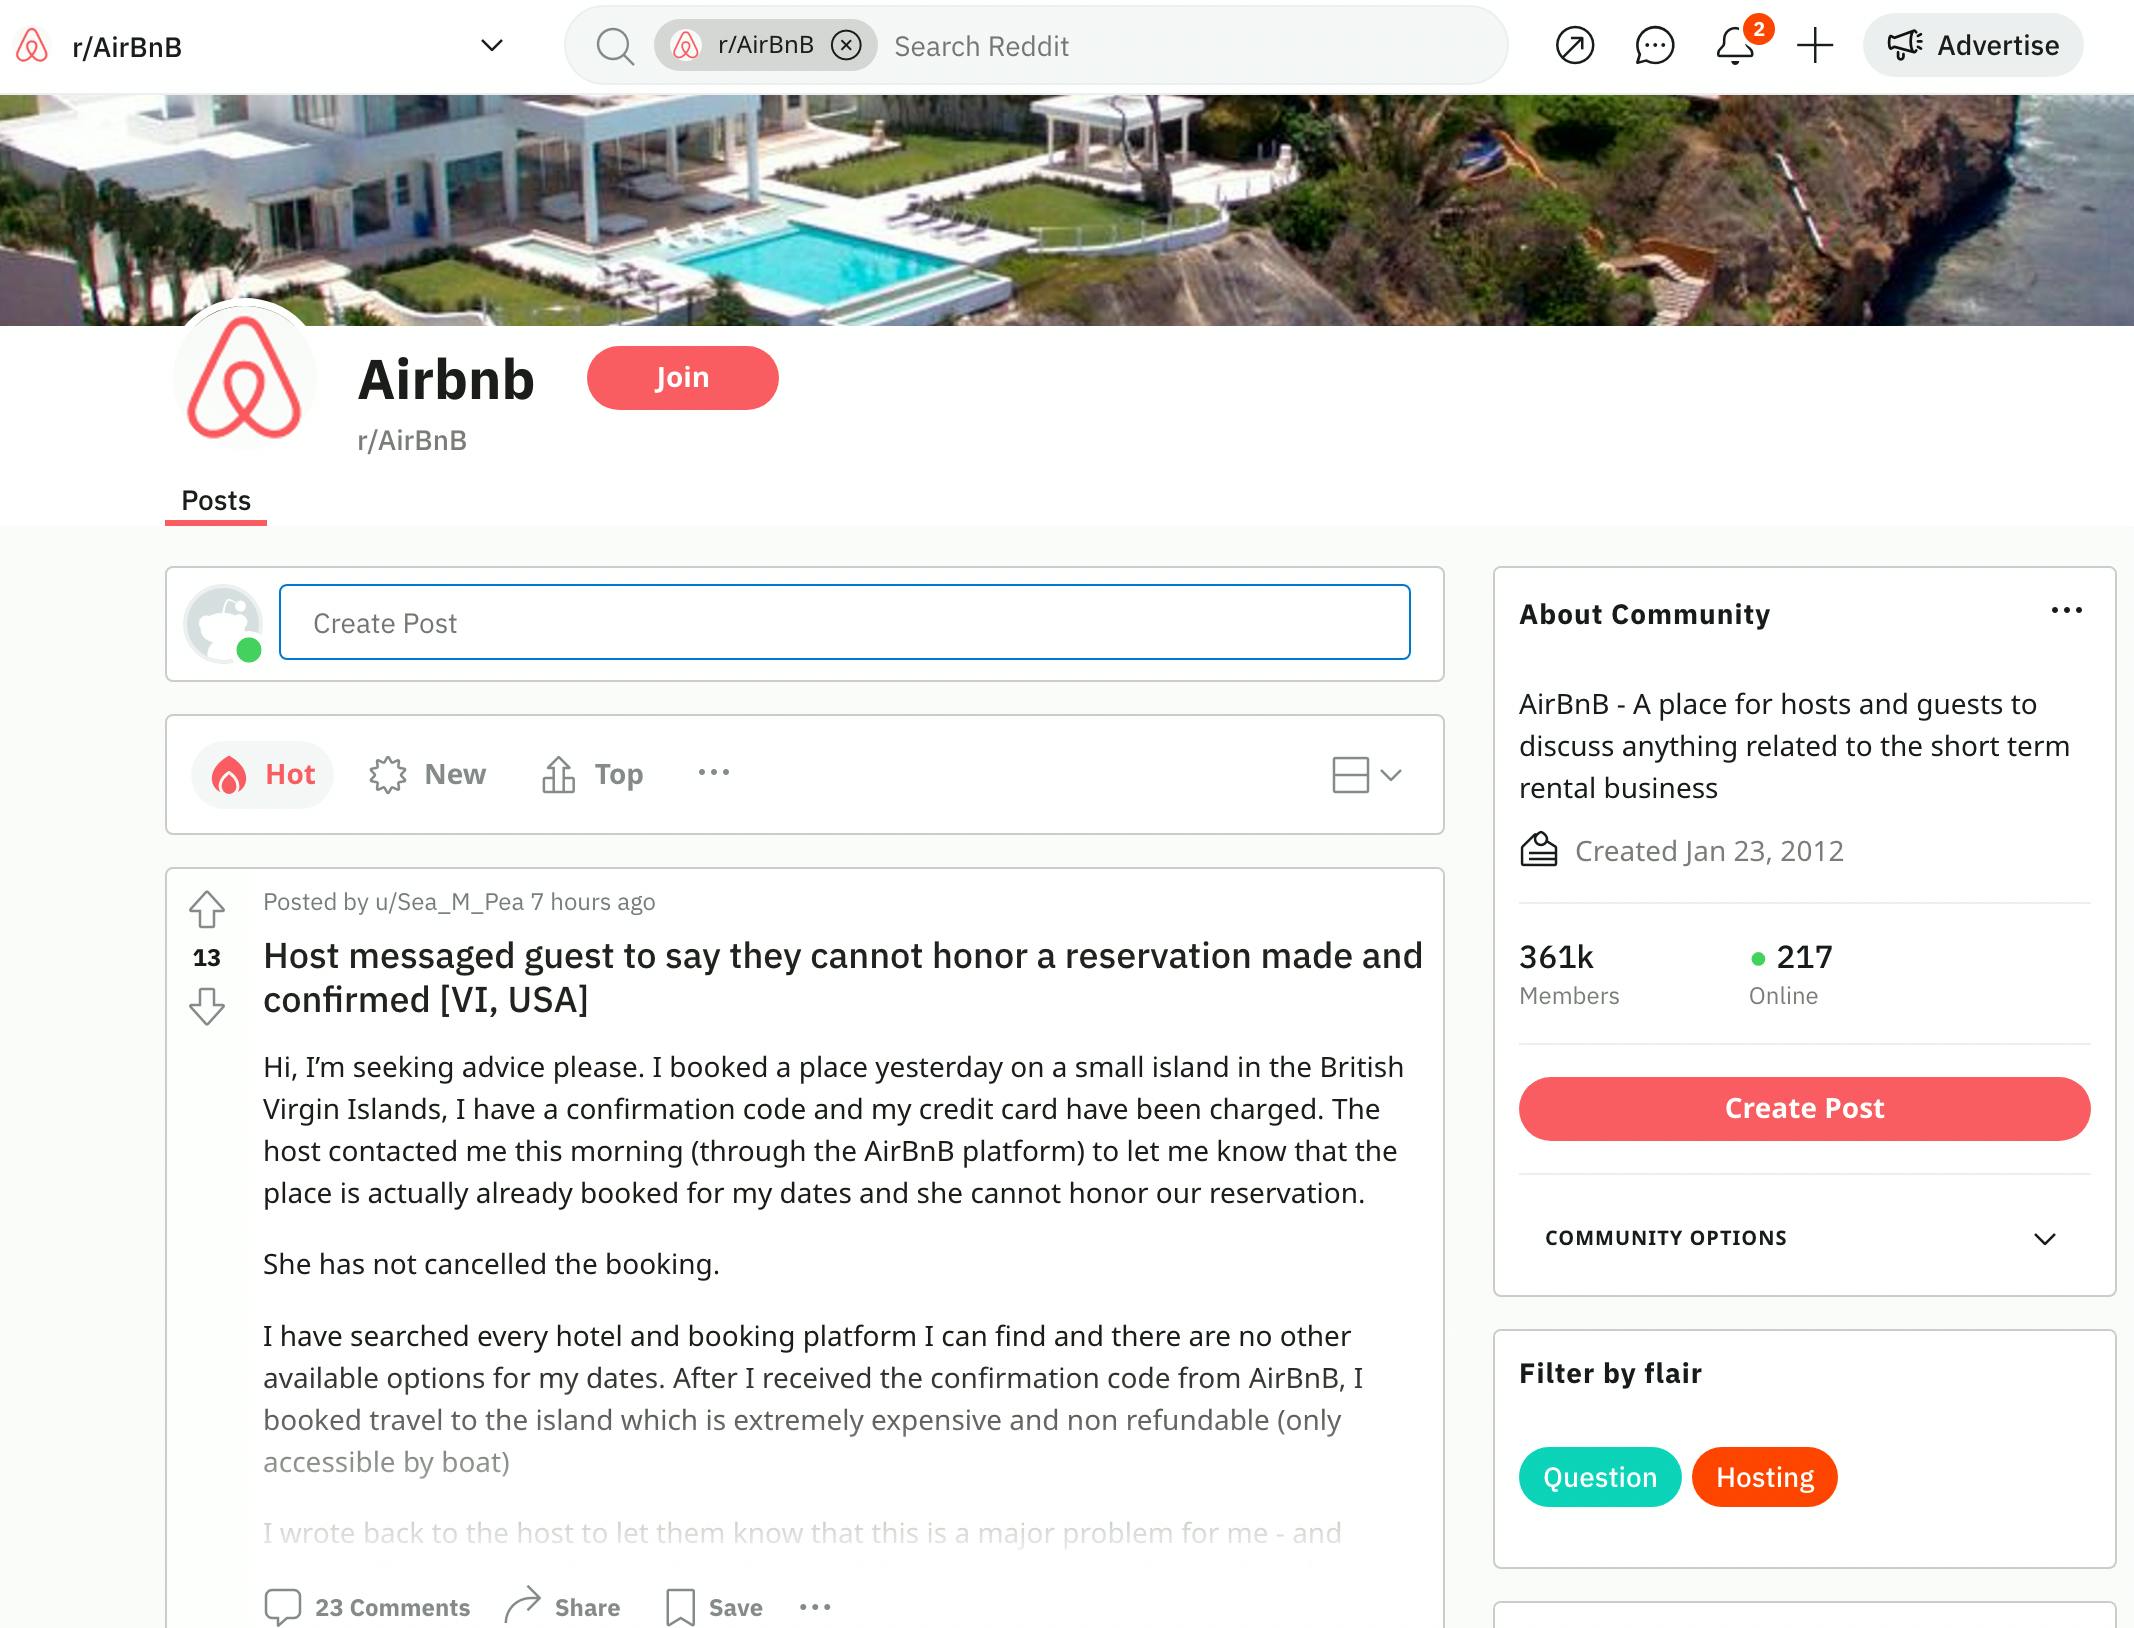 Airbnb's Reddit Community